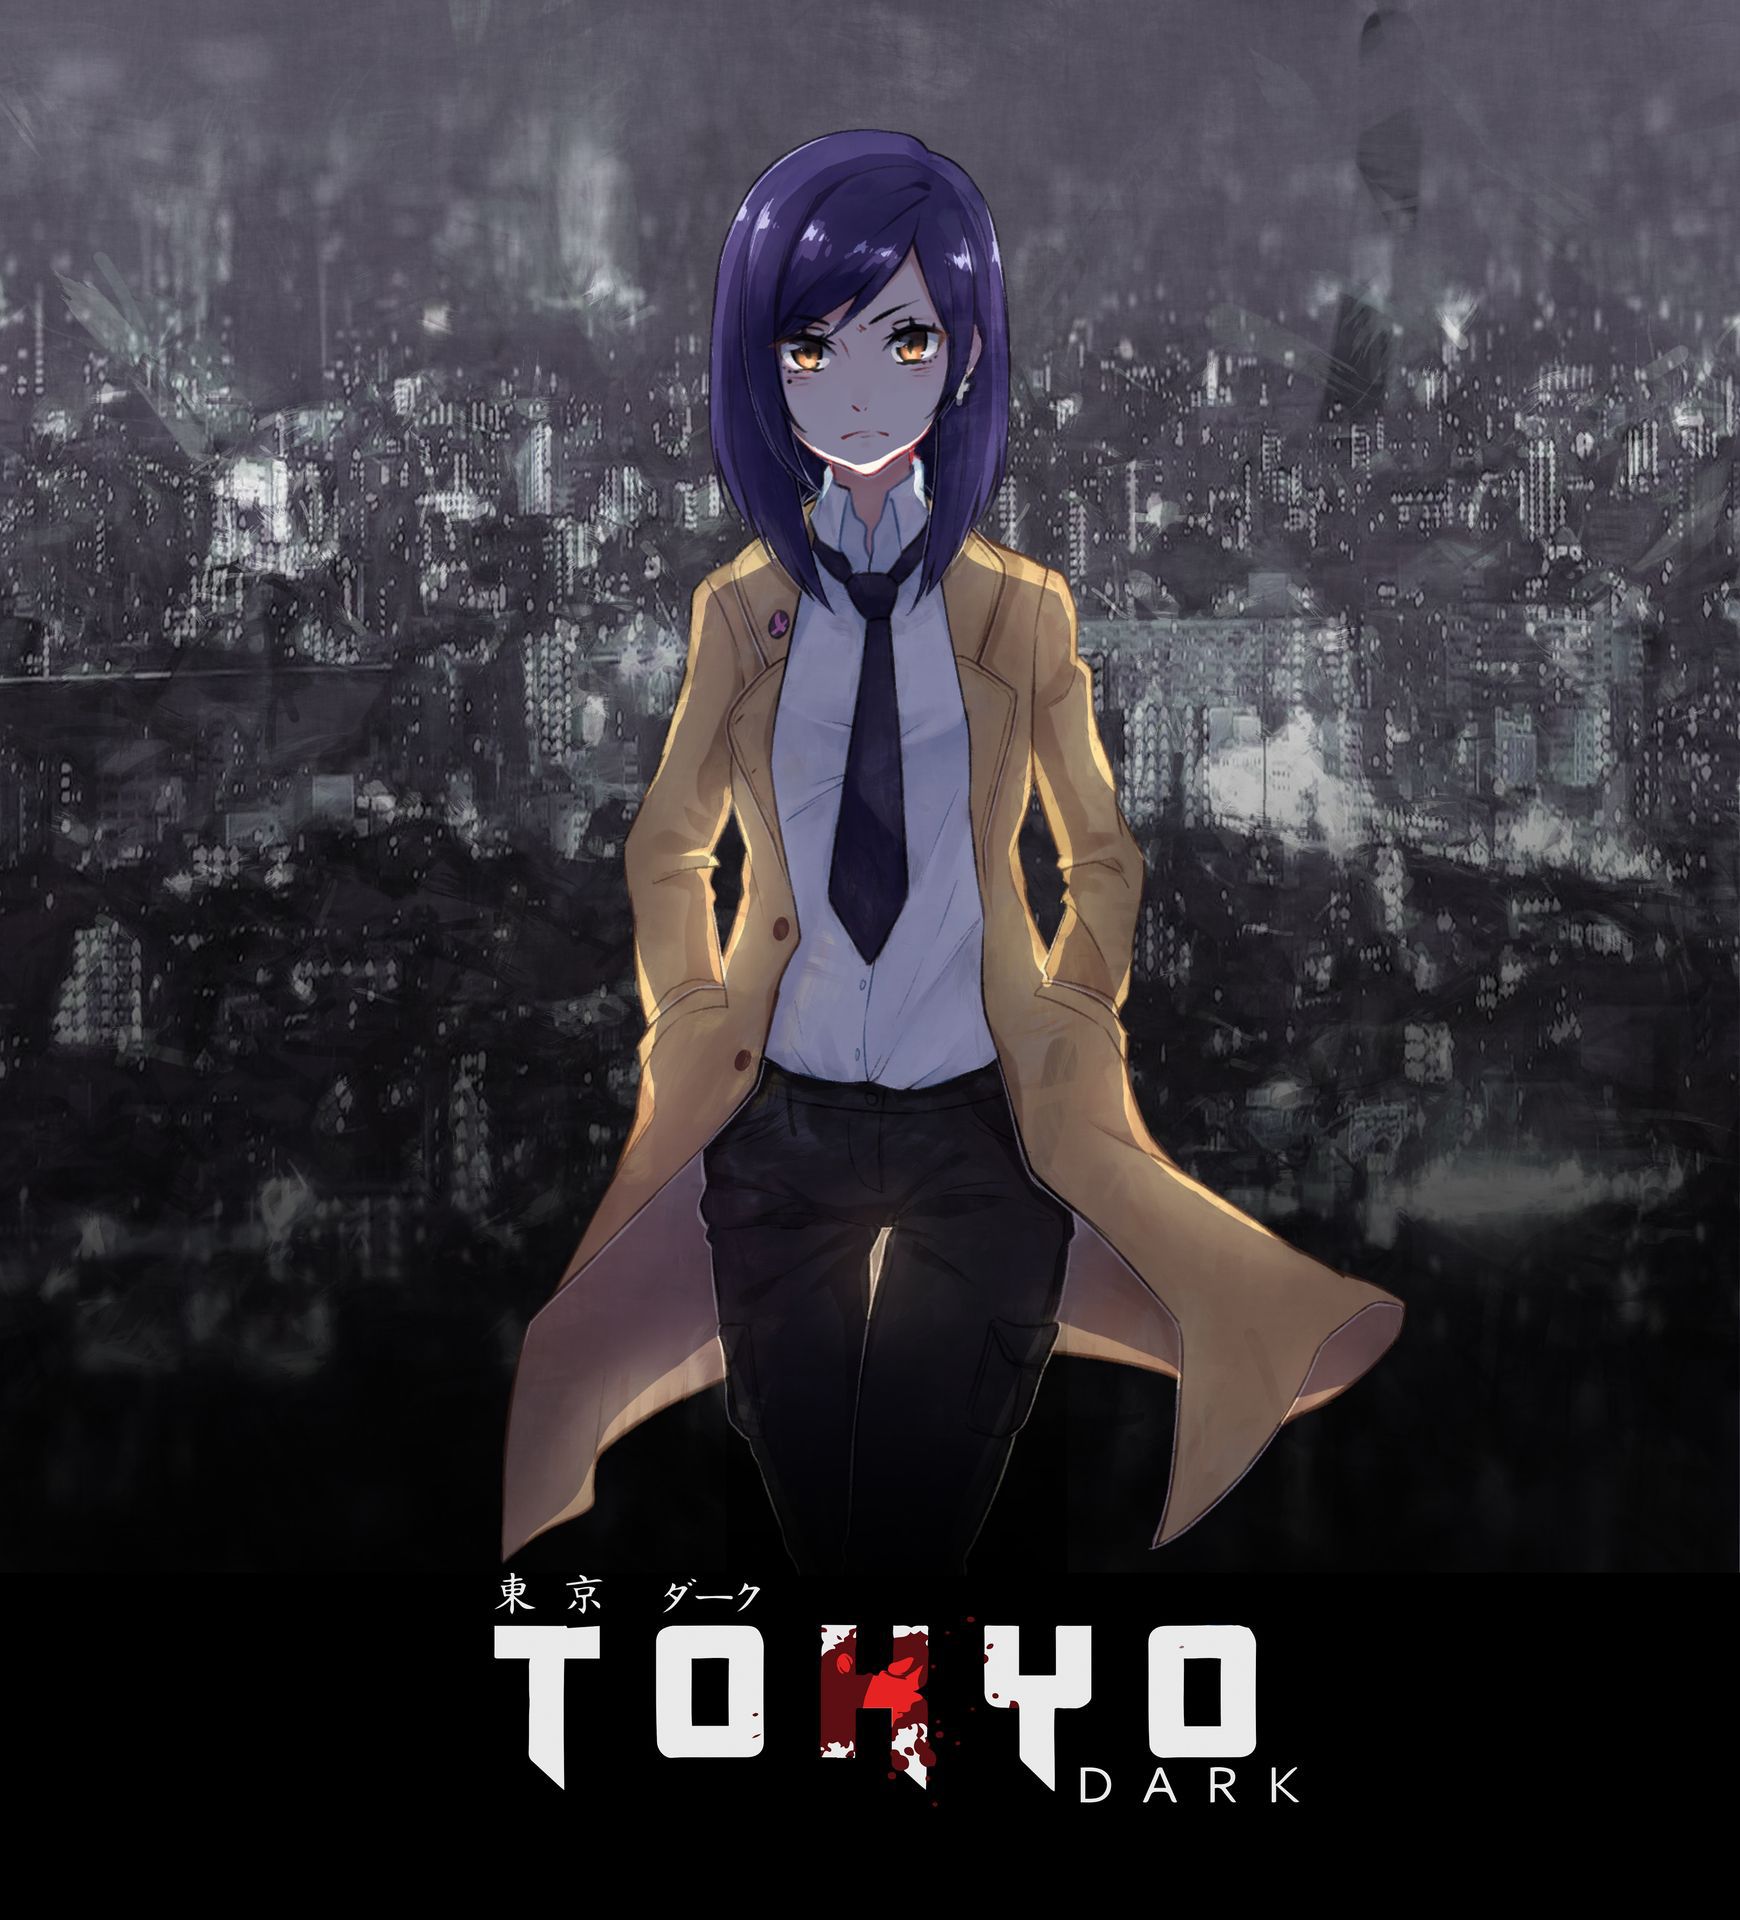 jaquette du jeu vidéo Tokyo Dark